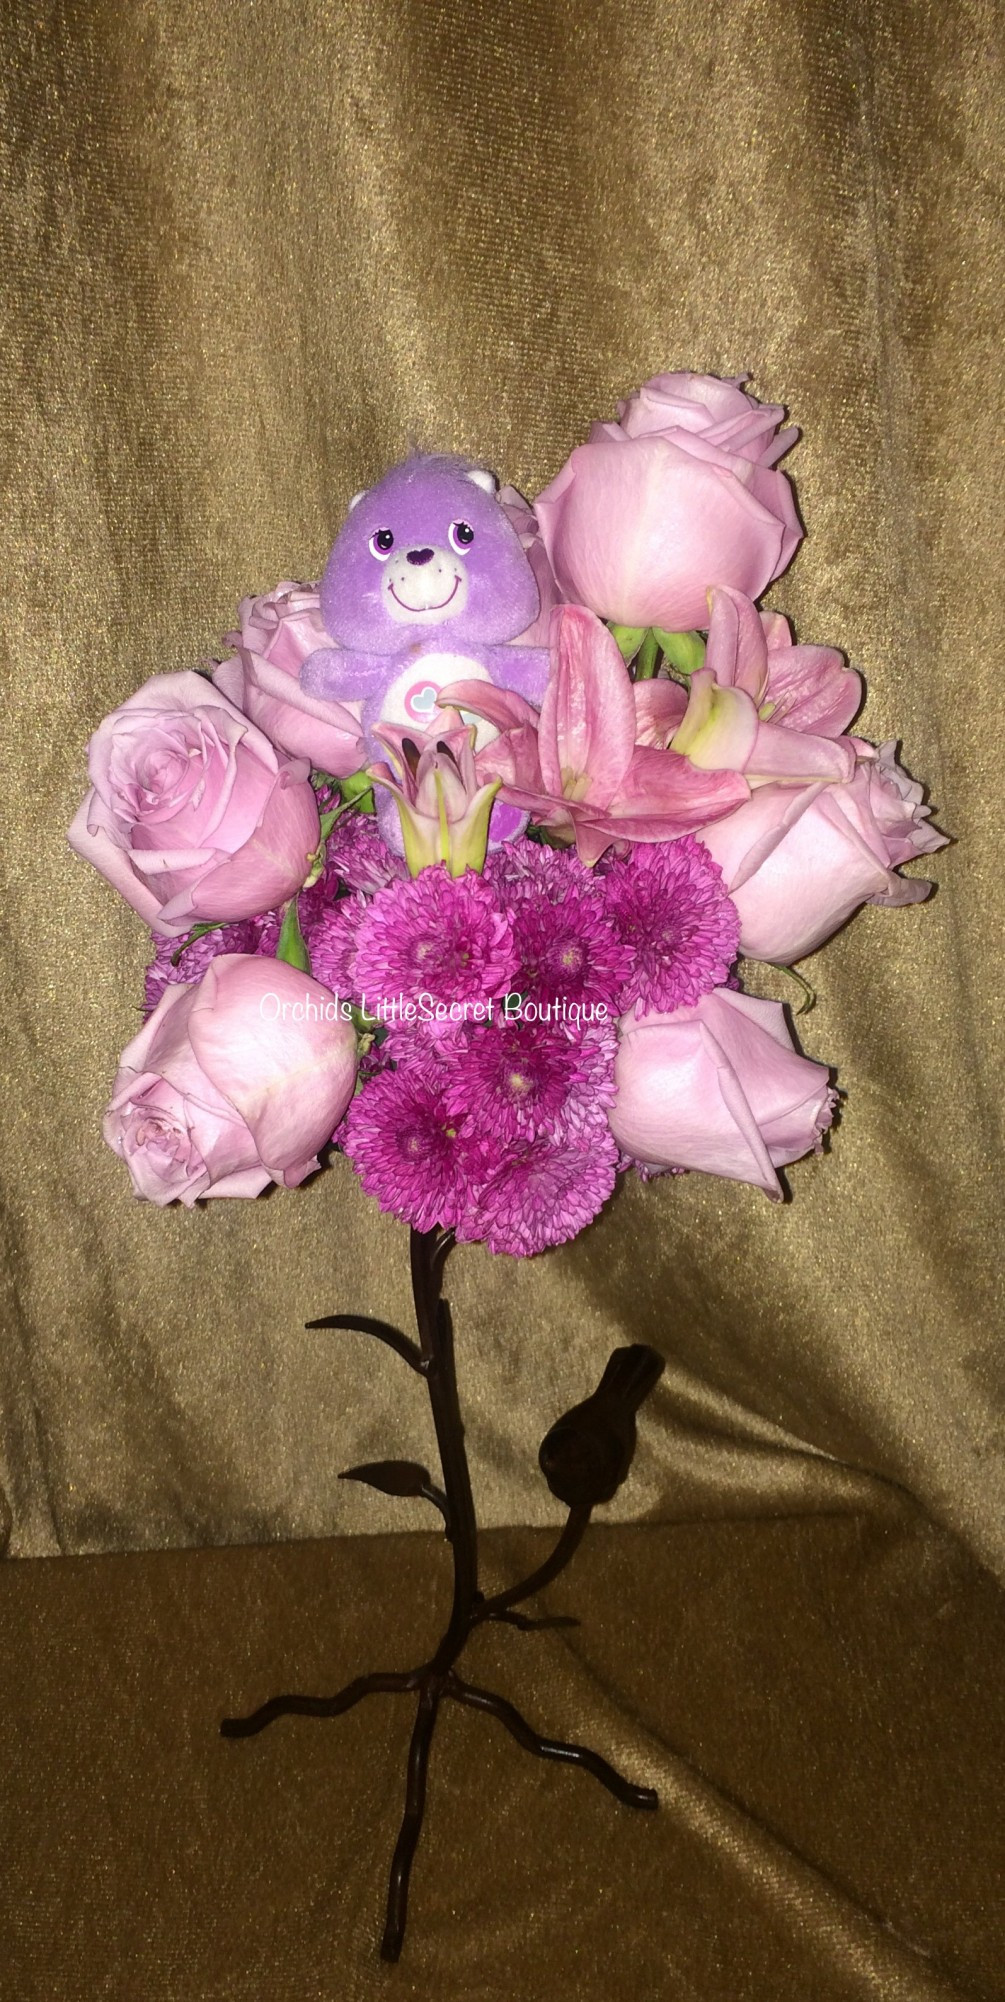 teddy bear vase of flower care bear flowers healthy within share lady care bear